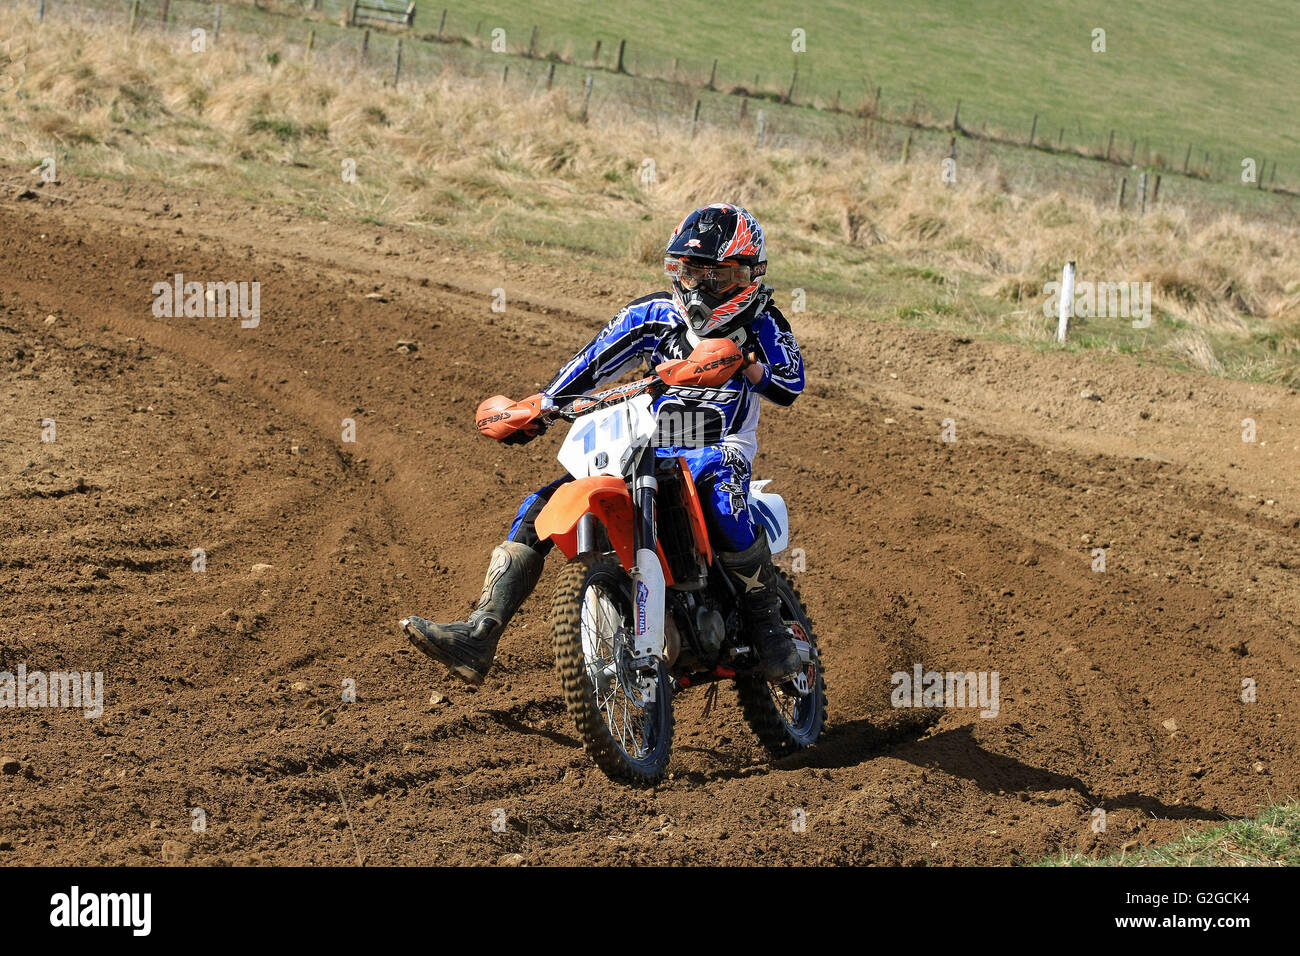 Motocross racing at Rhynie Motocross track, Rhynie Scotland. Stock Photo